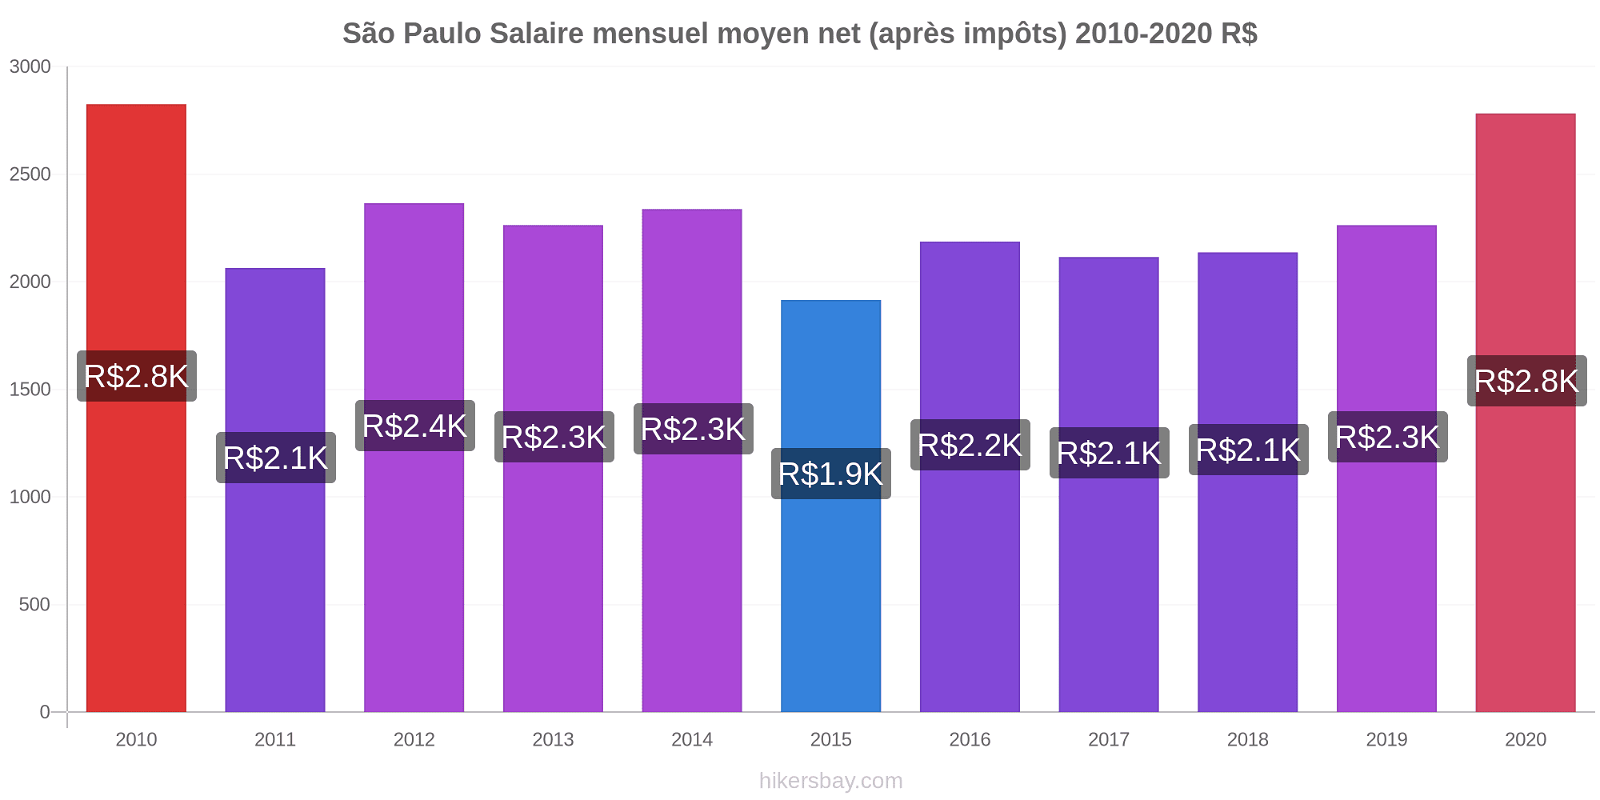 São Paulo changements de prix Salaire mensuel Net (après impôts) hikersbay.com